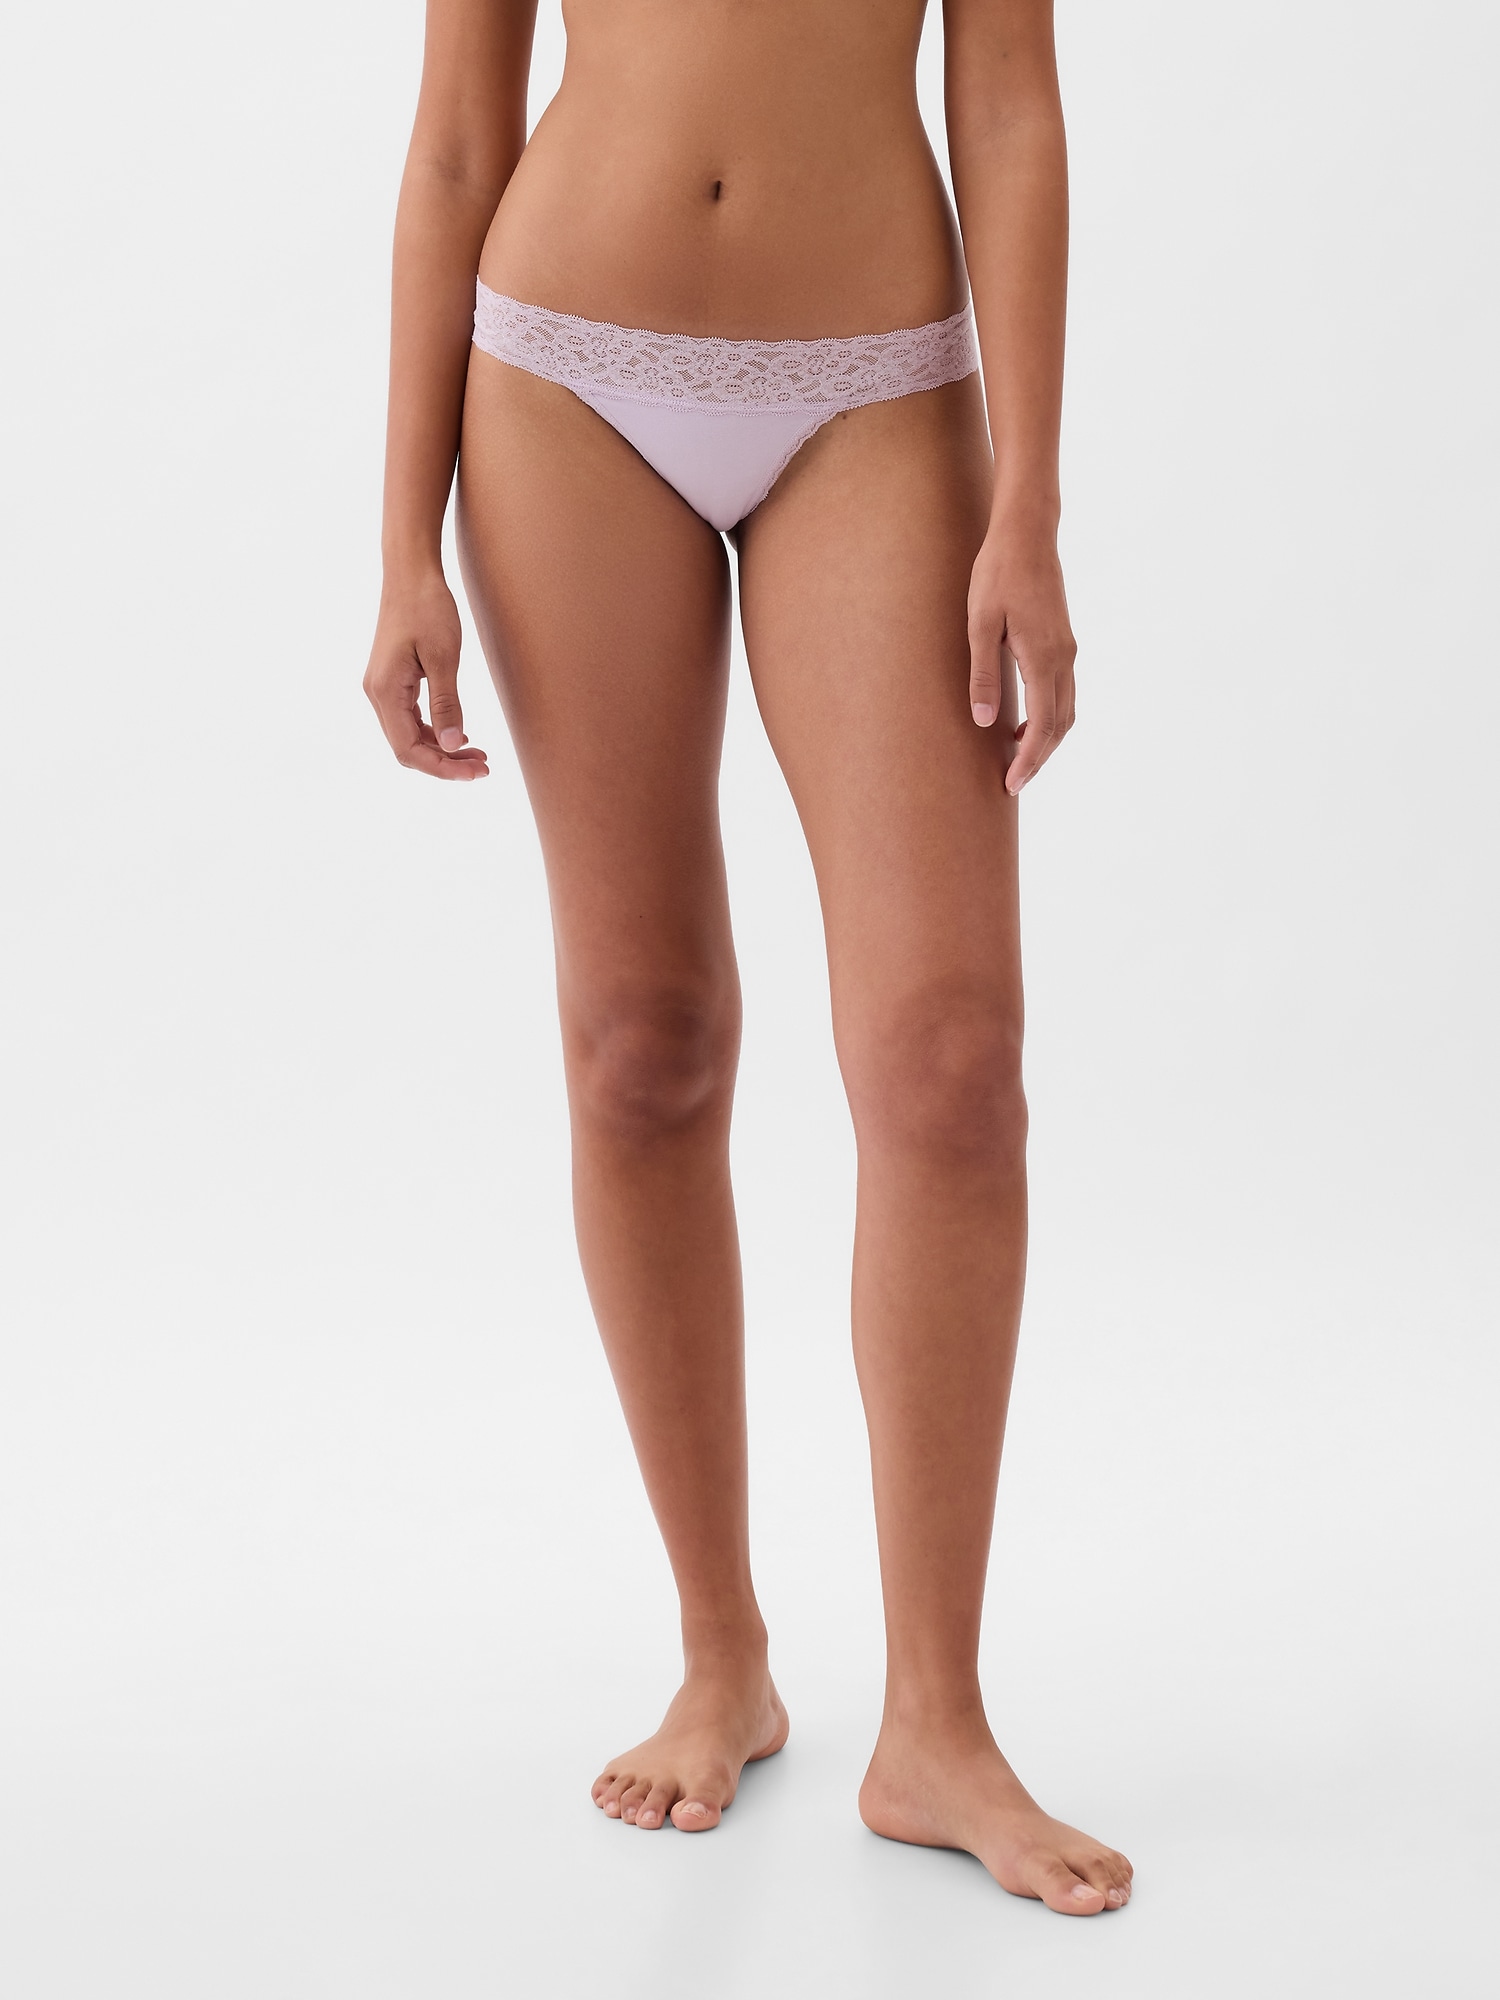 Gap Lace Bikini Undies Stretch Cotton Women's Underwear Panties 1